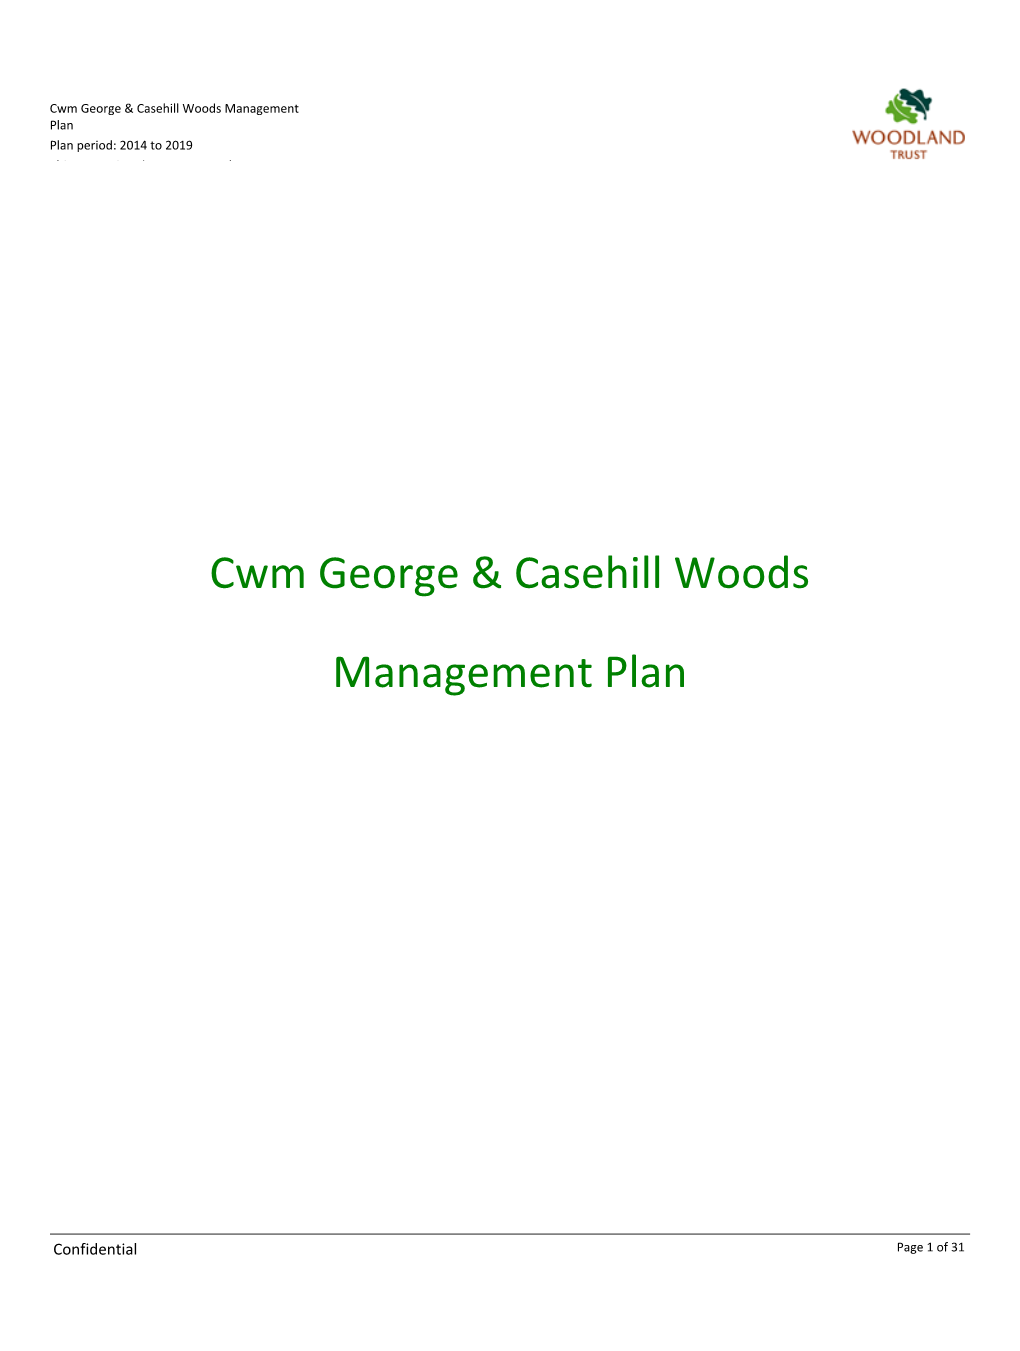 Cwm George & Casehill Woods Management Plan